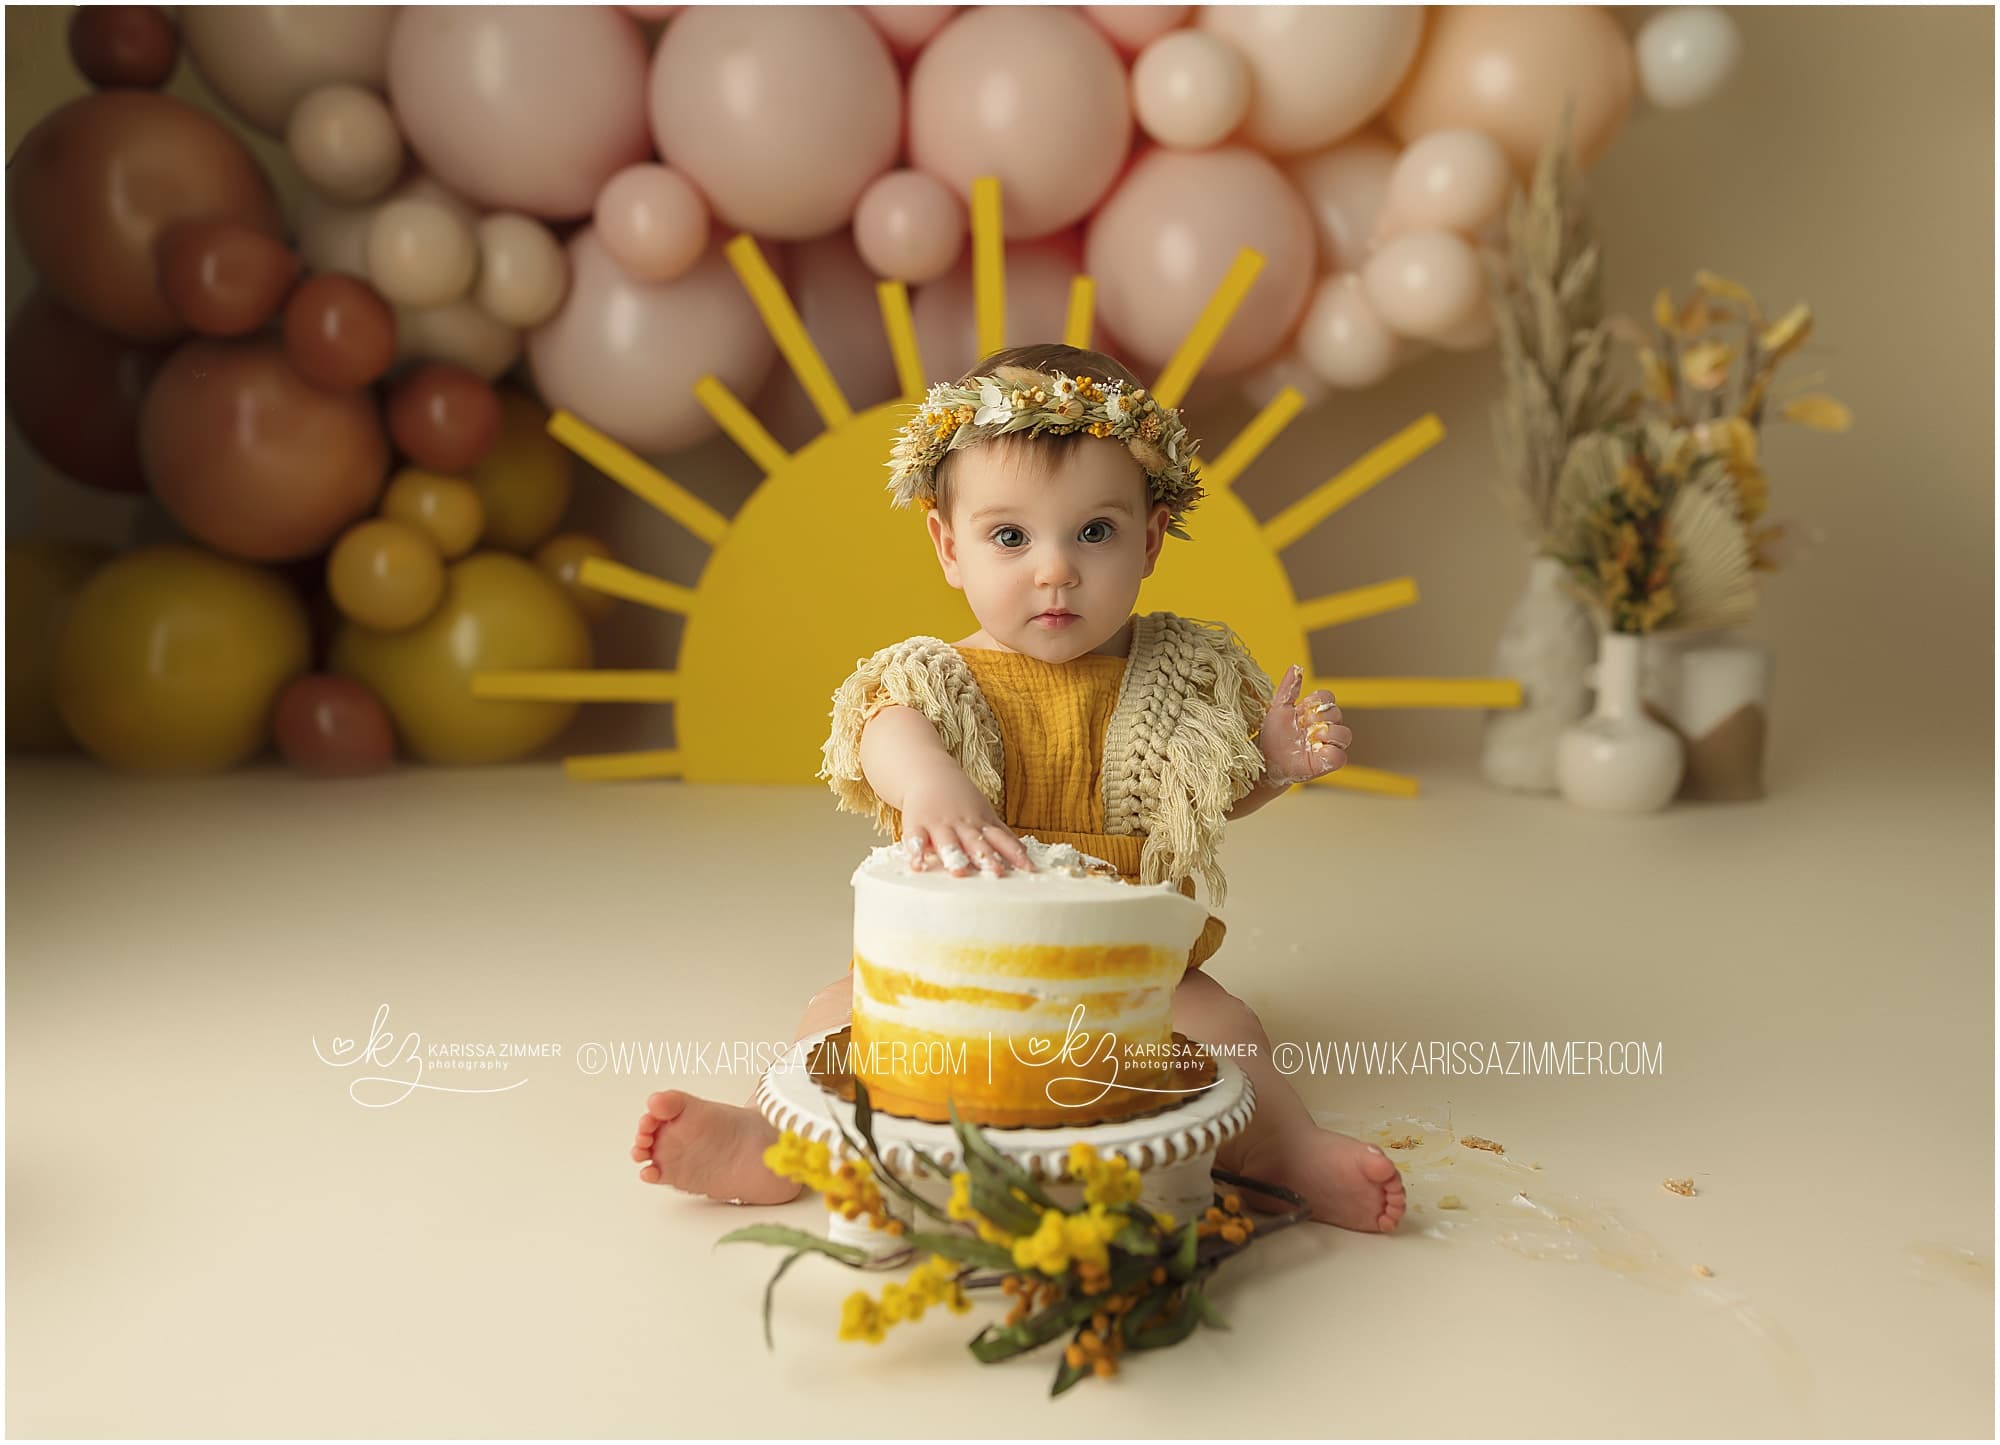 You Are My Sunshine Theme Cake Smash Photoshoot, Harrisburg cake smash photography, baby photography in Harrisburg PA